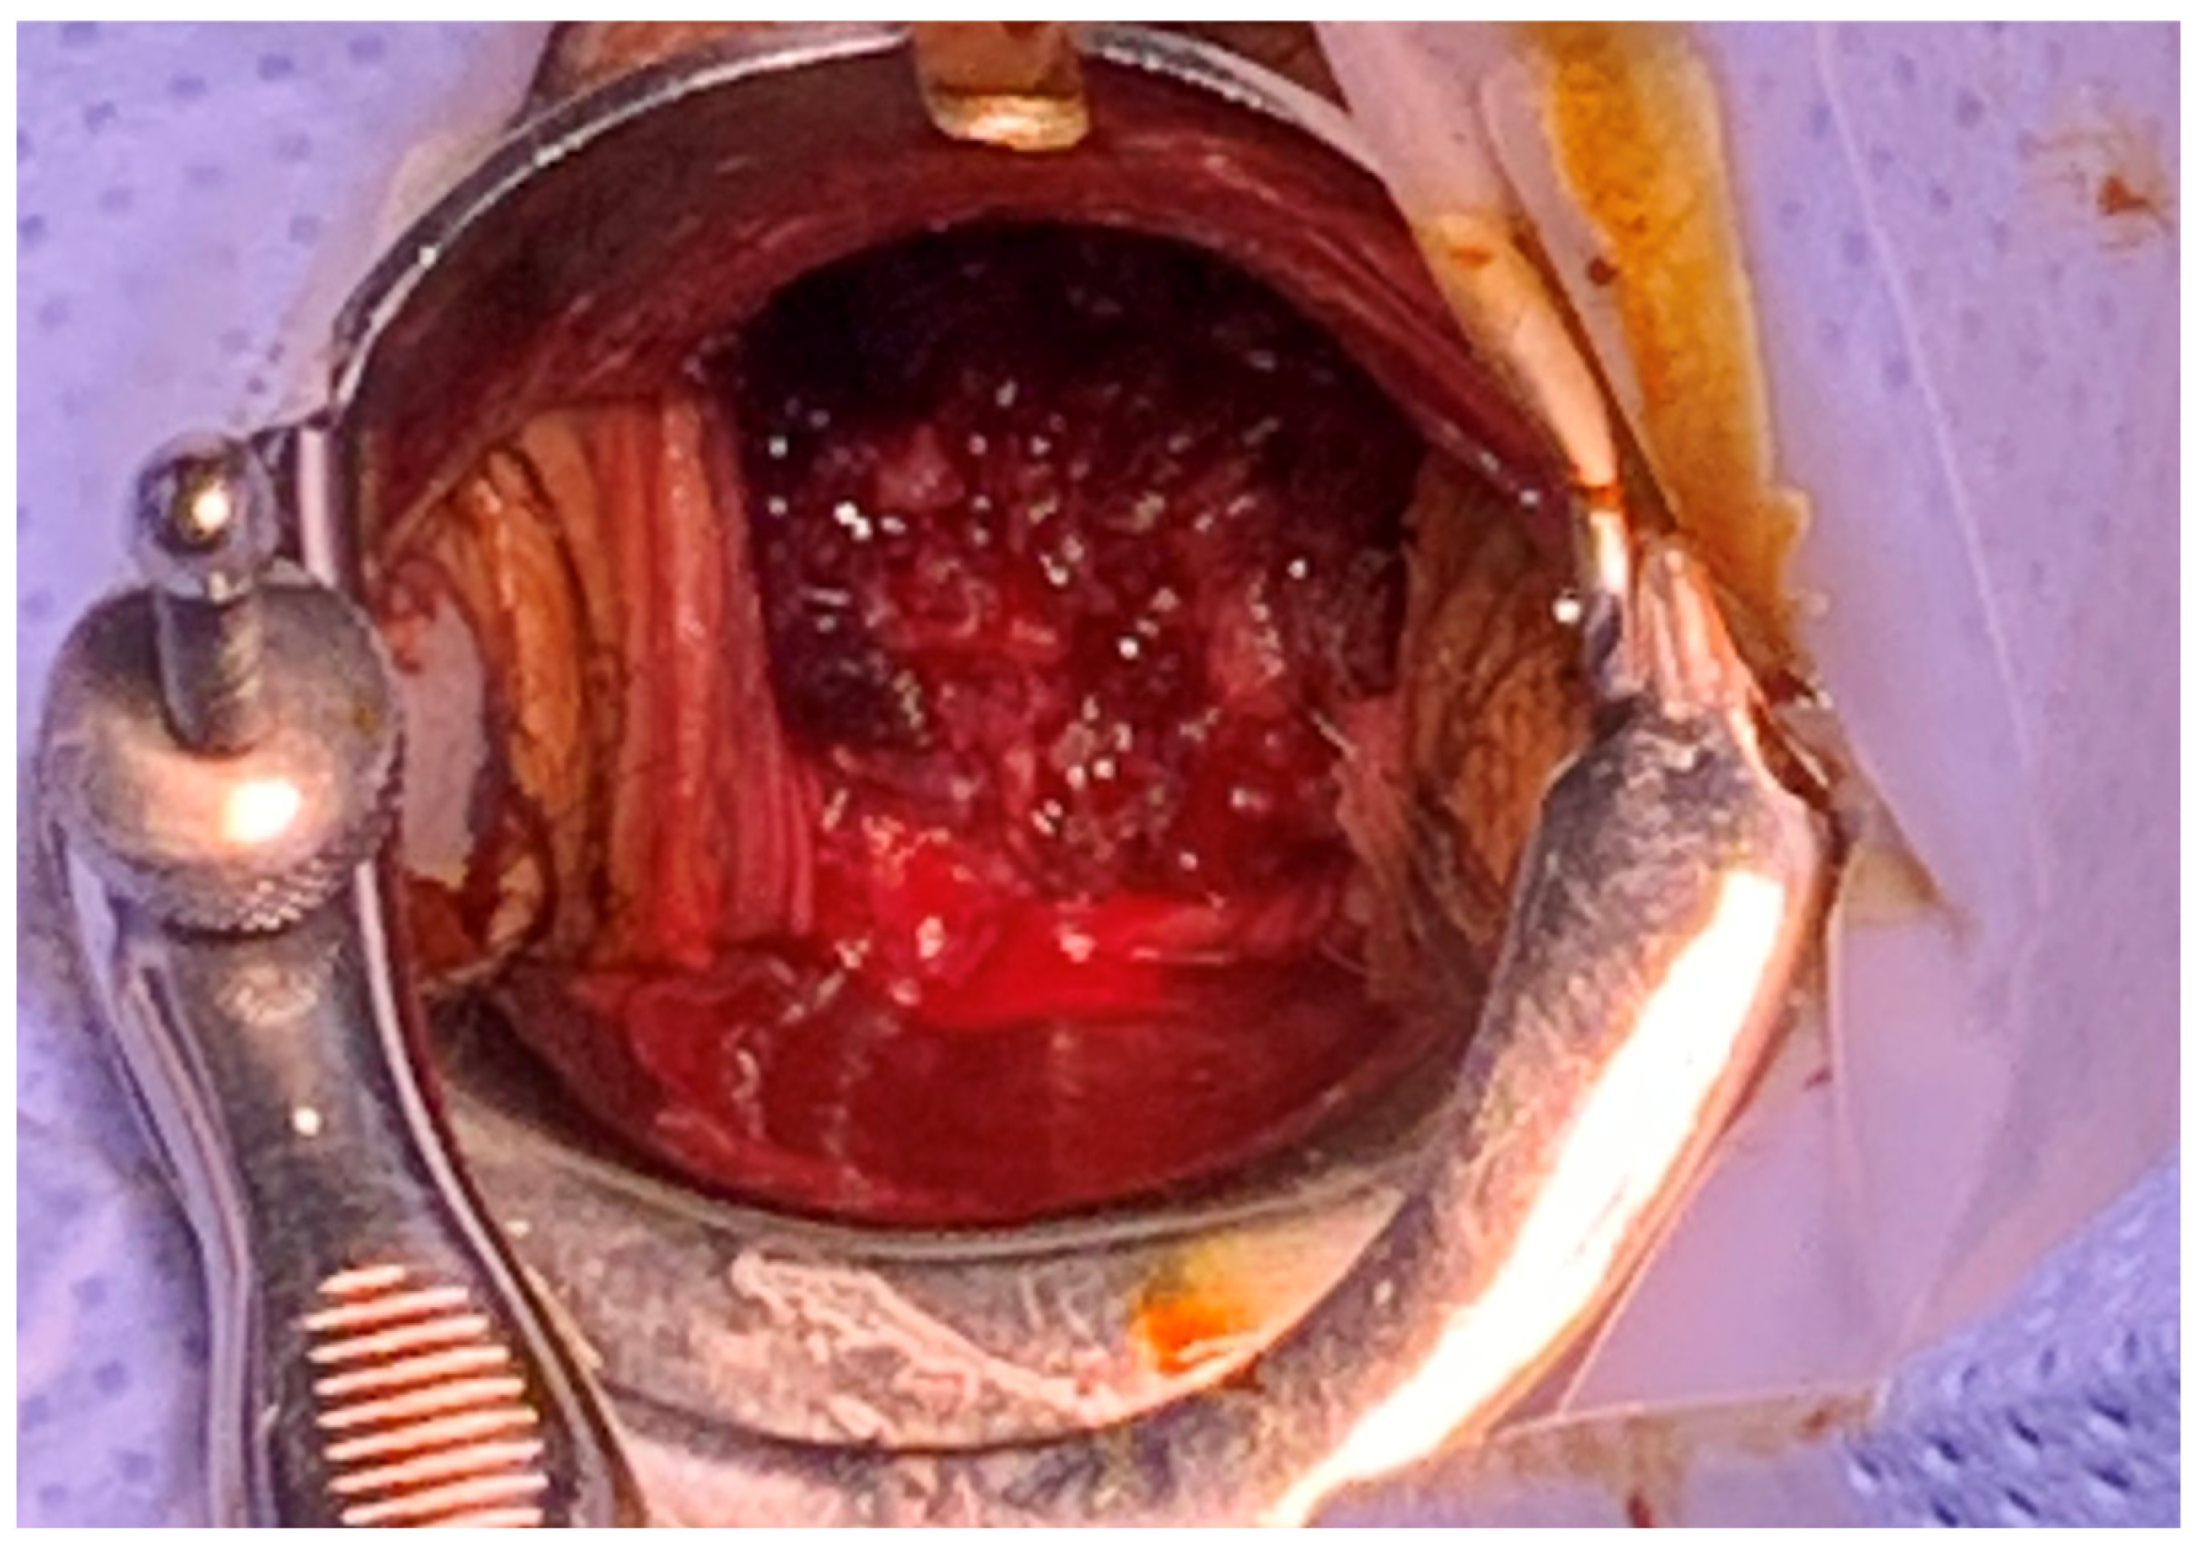 Photographs from laparoscopy showing: (A) internal bleeding